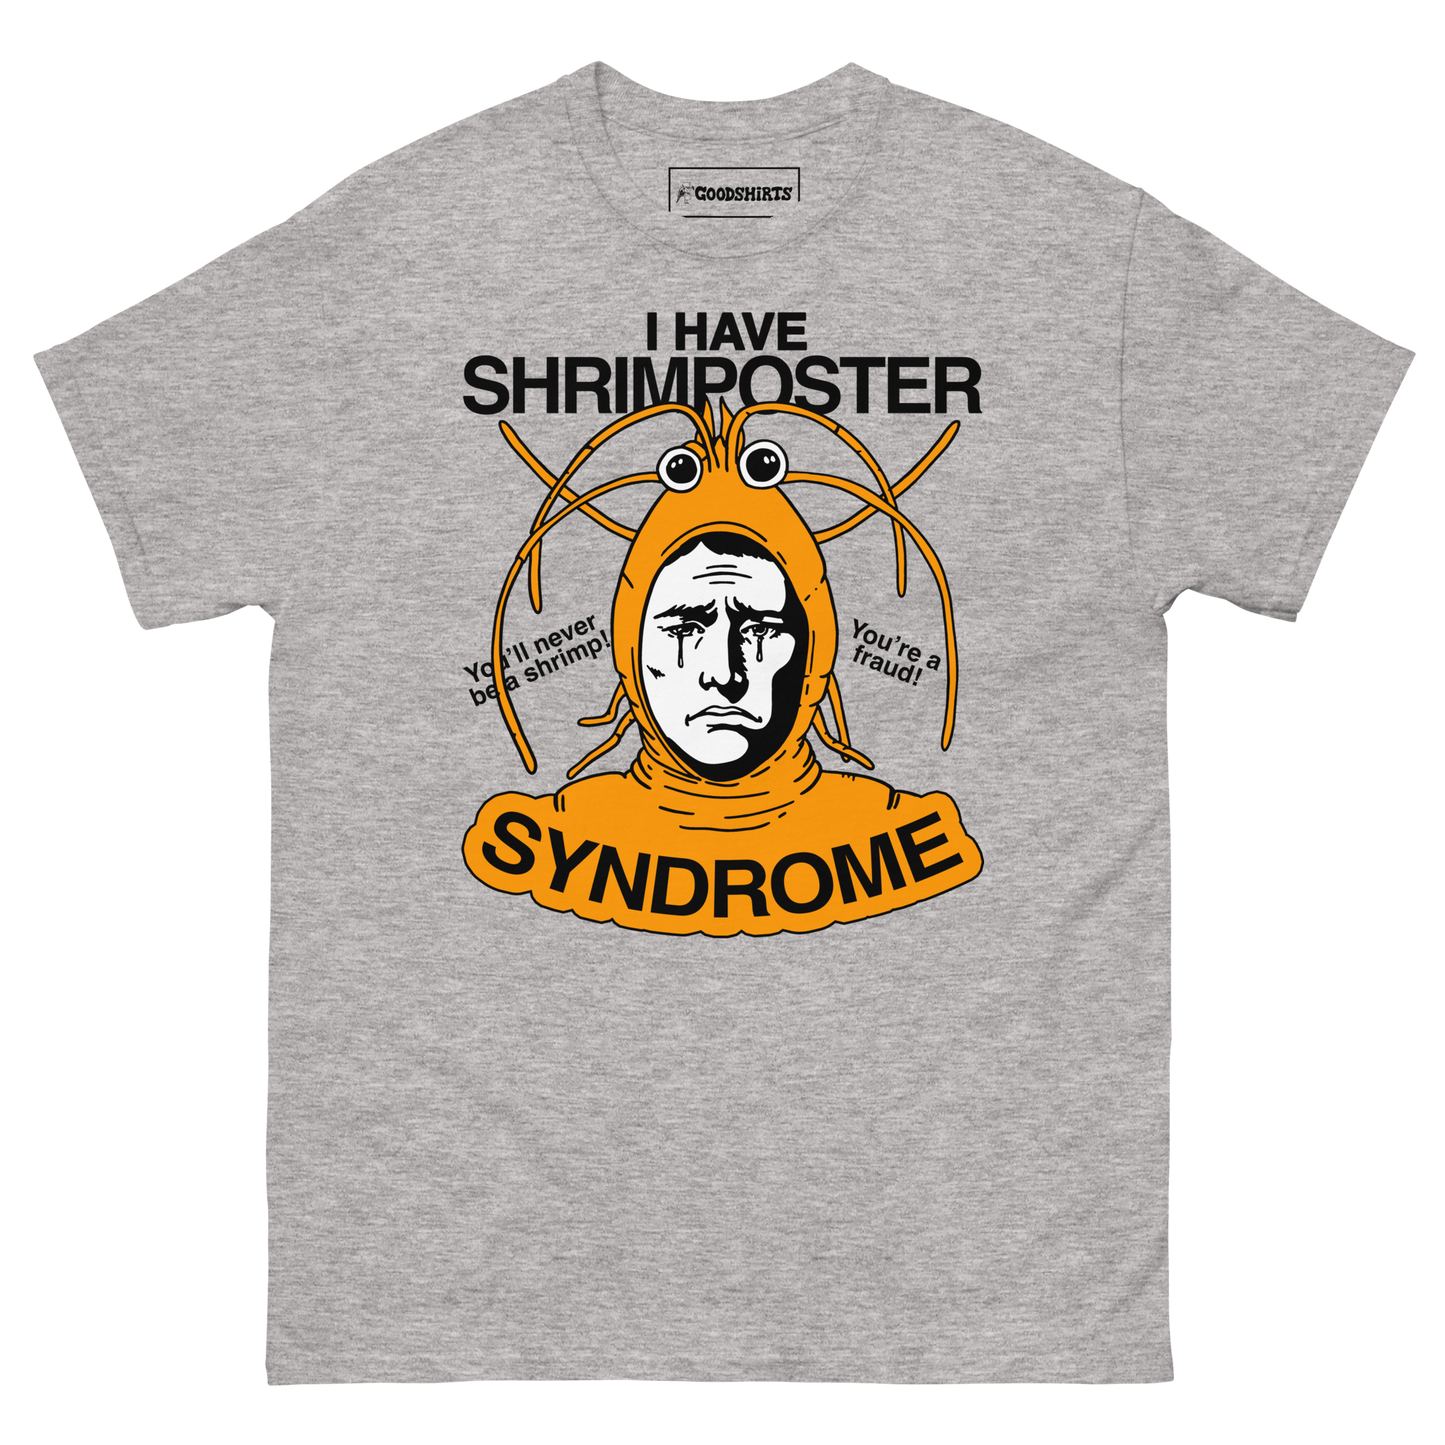 I Have Shrimposter Syndrome.